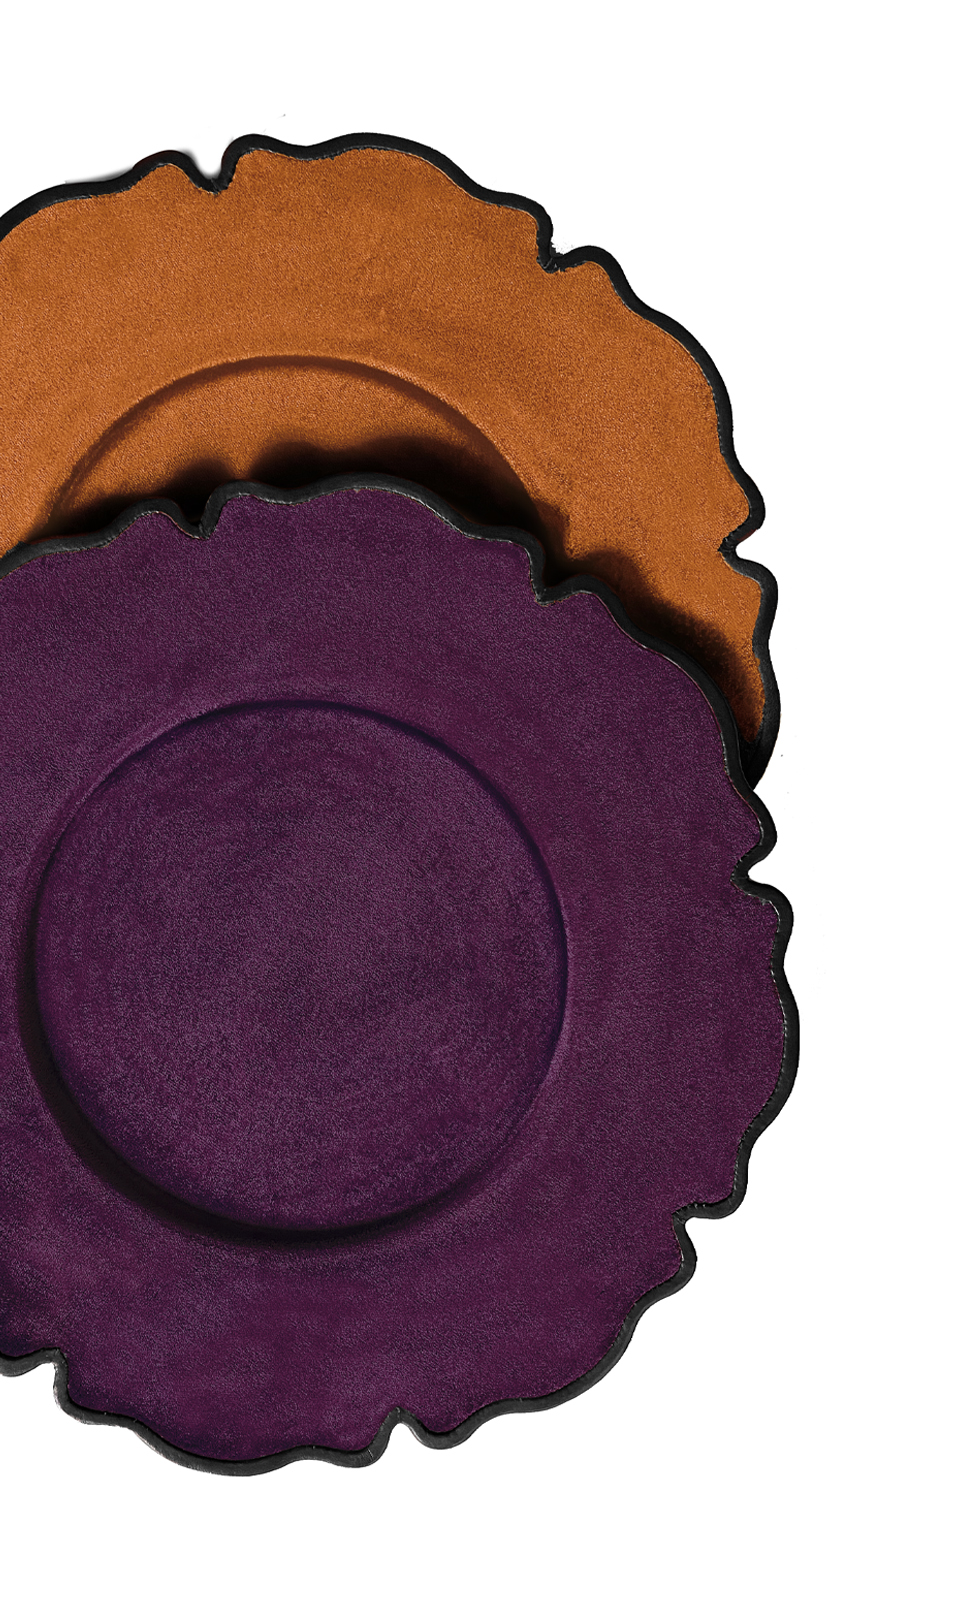 Ibisco是一款花朵造型的皮革或橡胶黄麻织物杯垫，请参见Promemoria产品目录|Promemoria